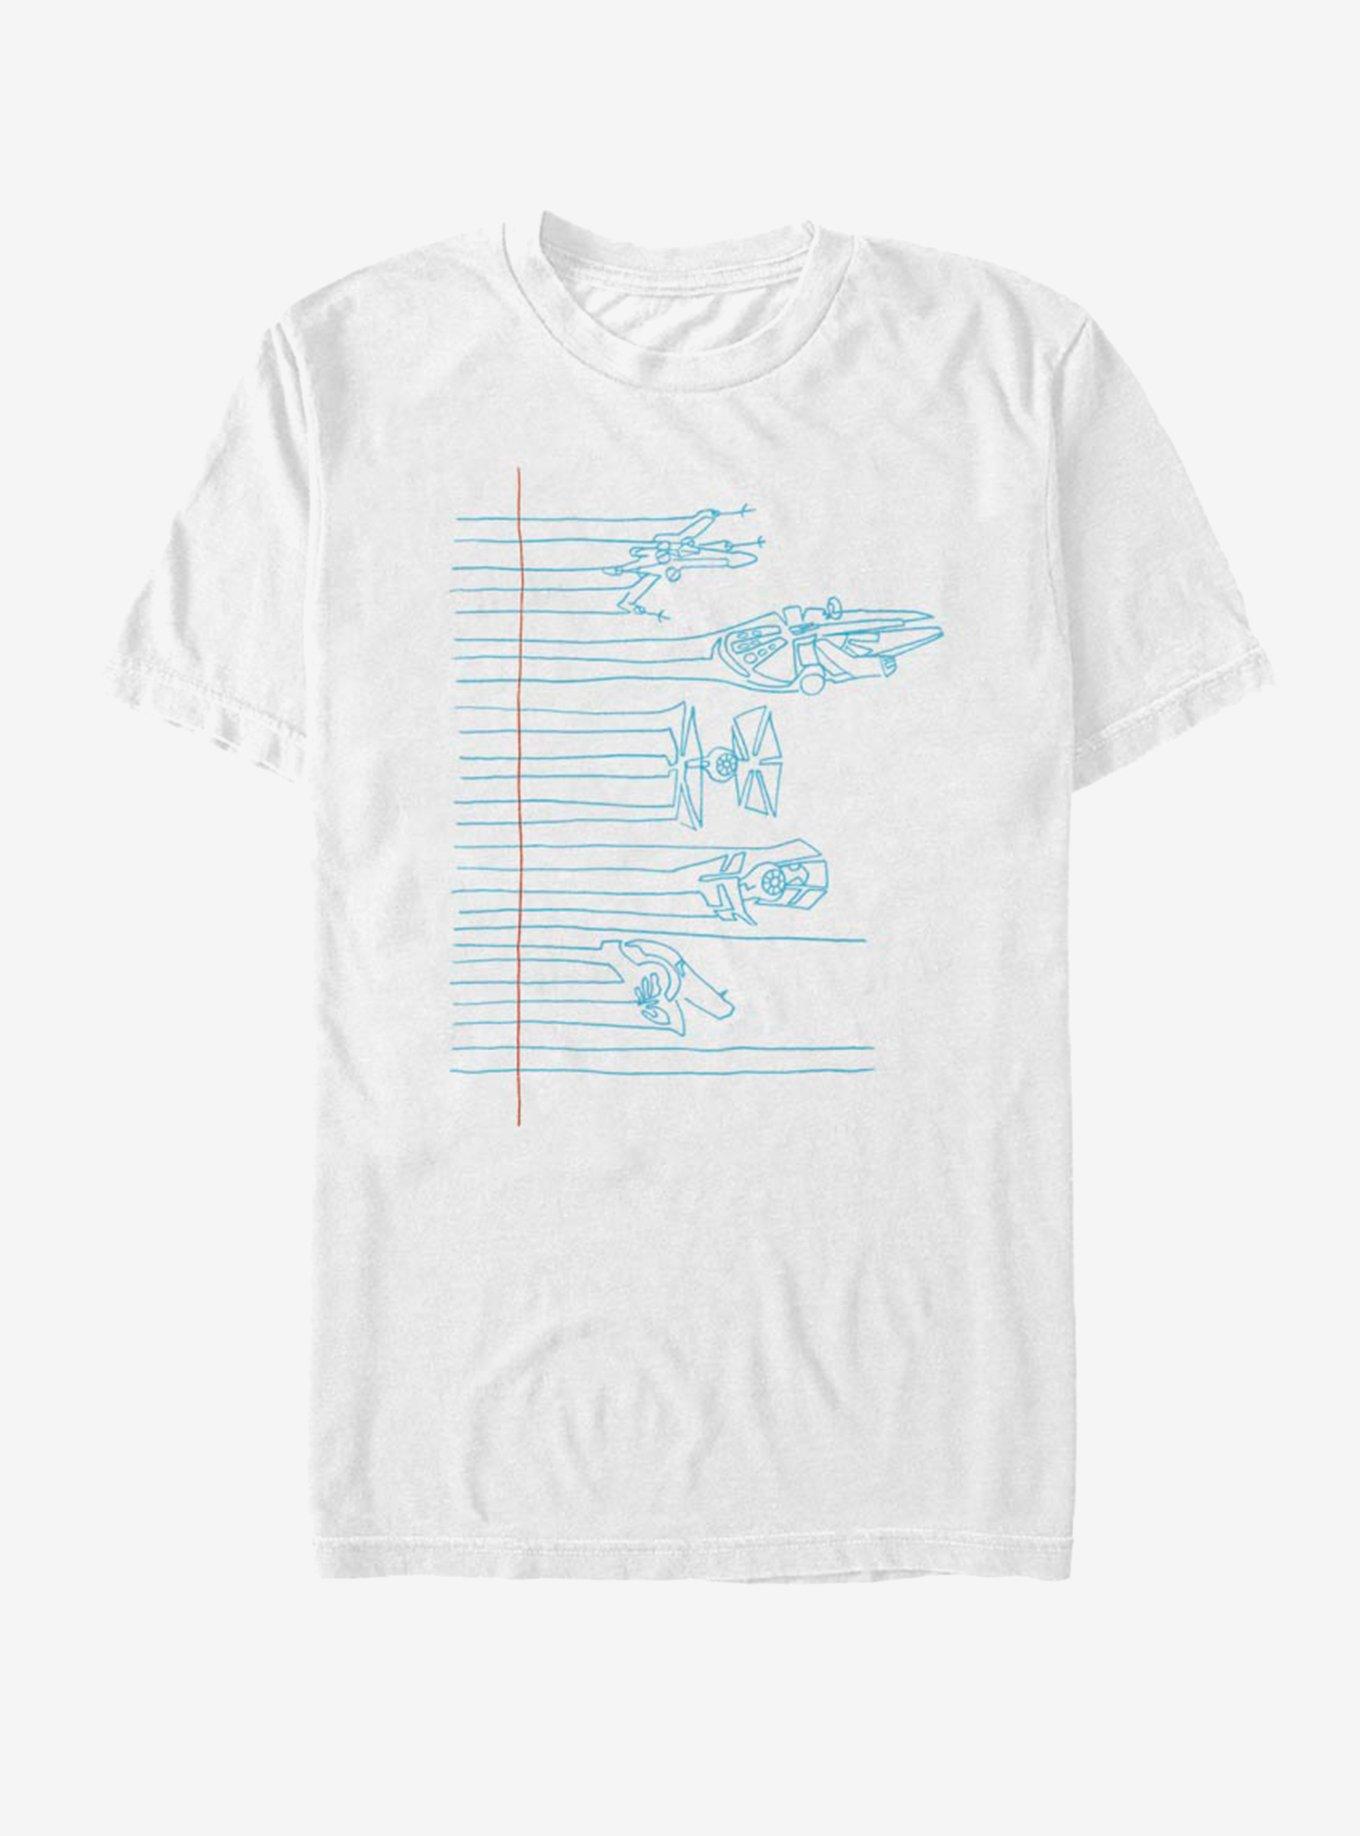 Star Wars Linework T-Shirt